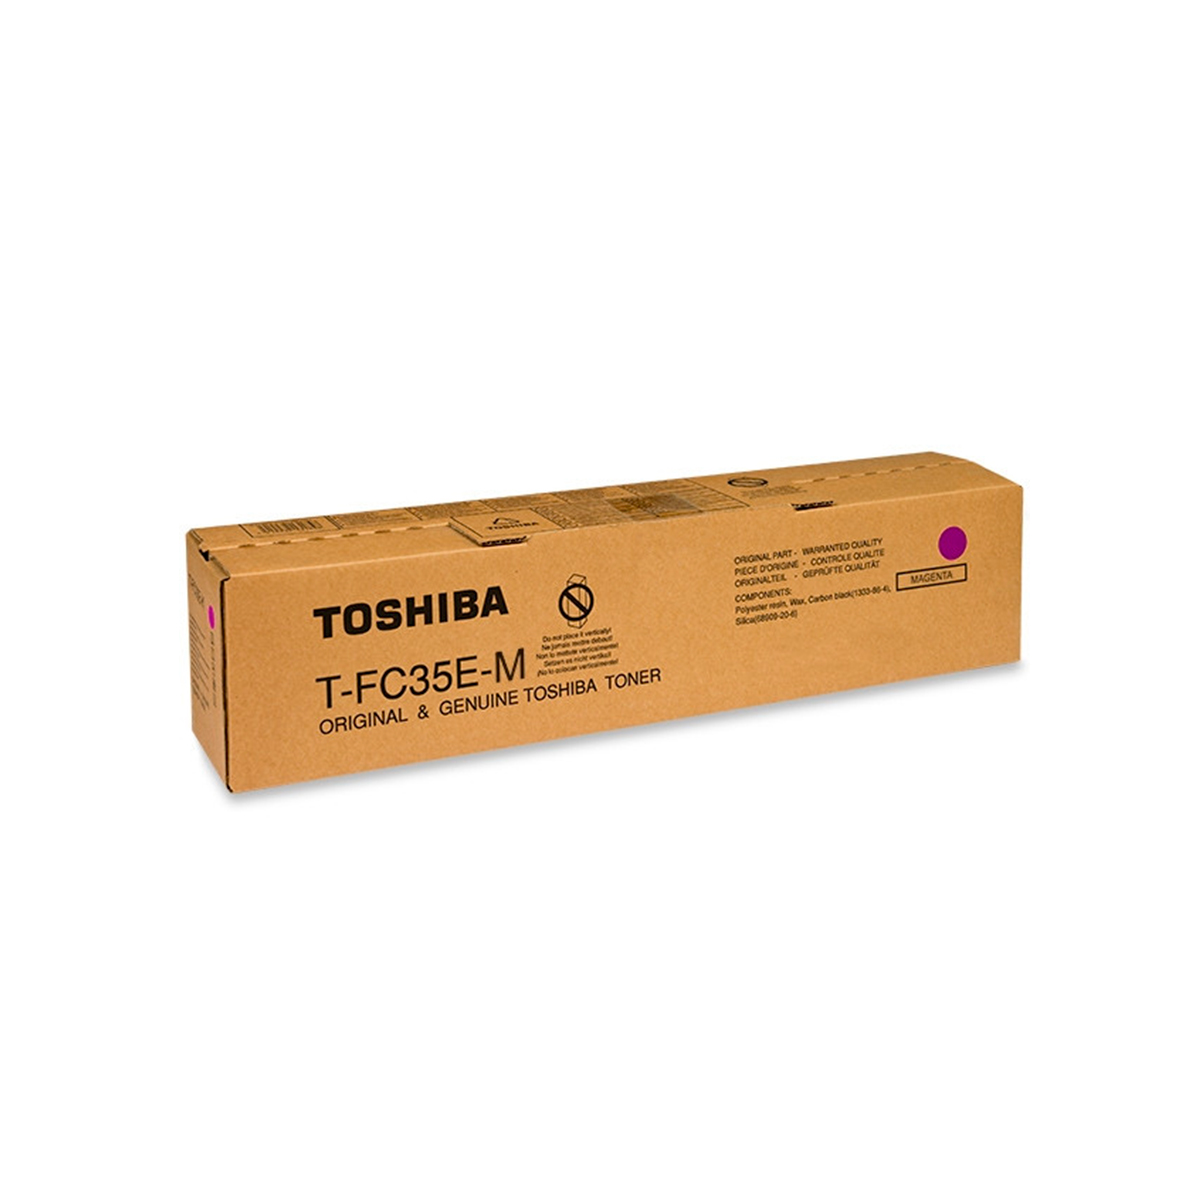 TOSHIBA TONER MAGENTA TFC35M